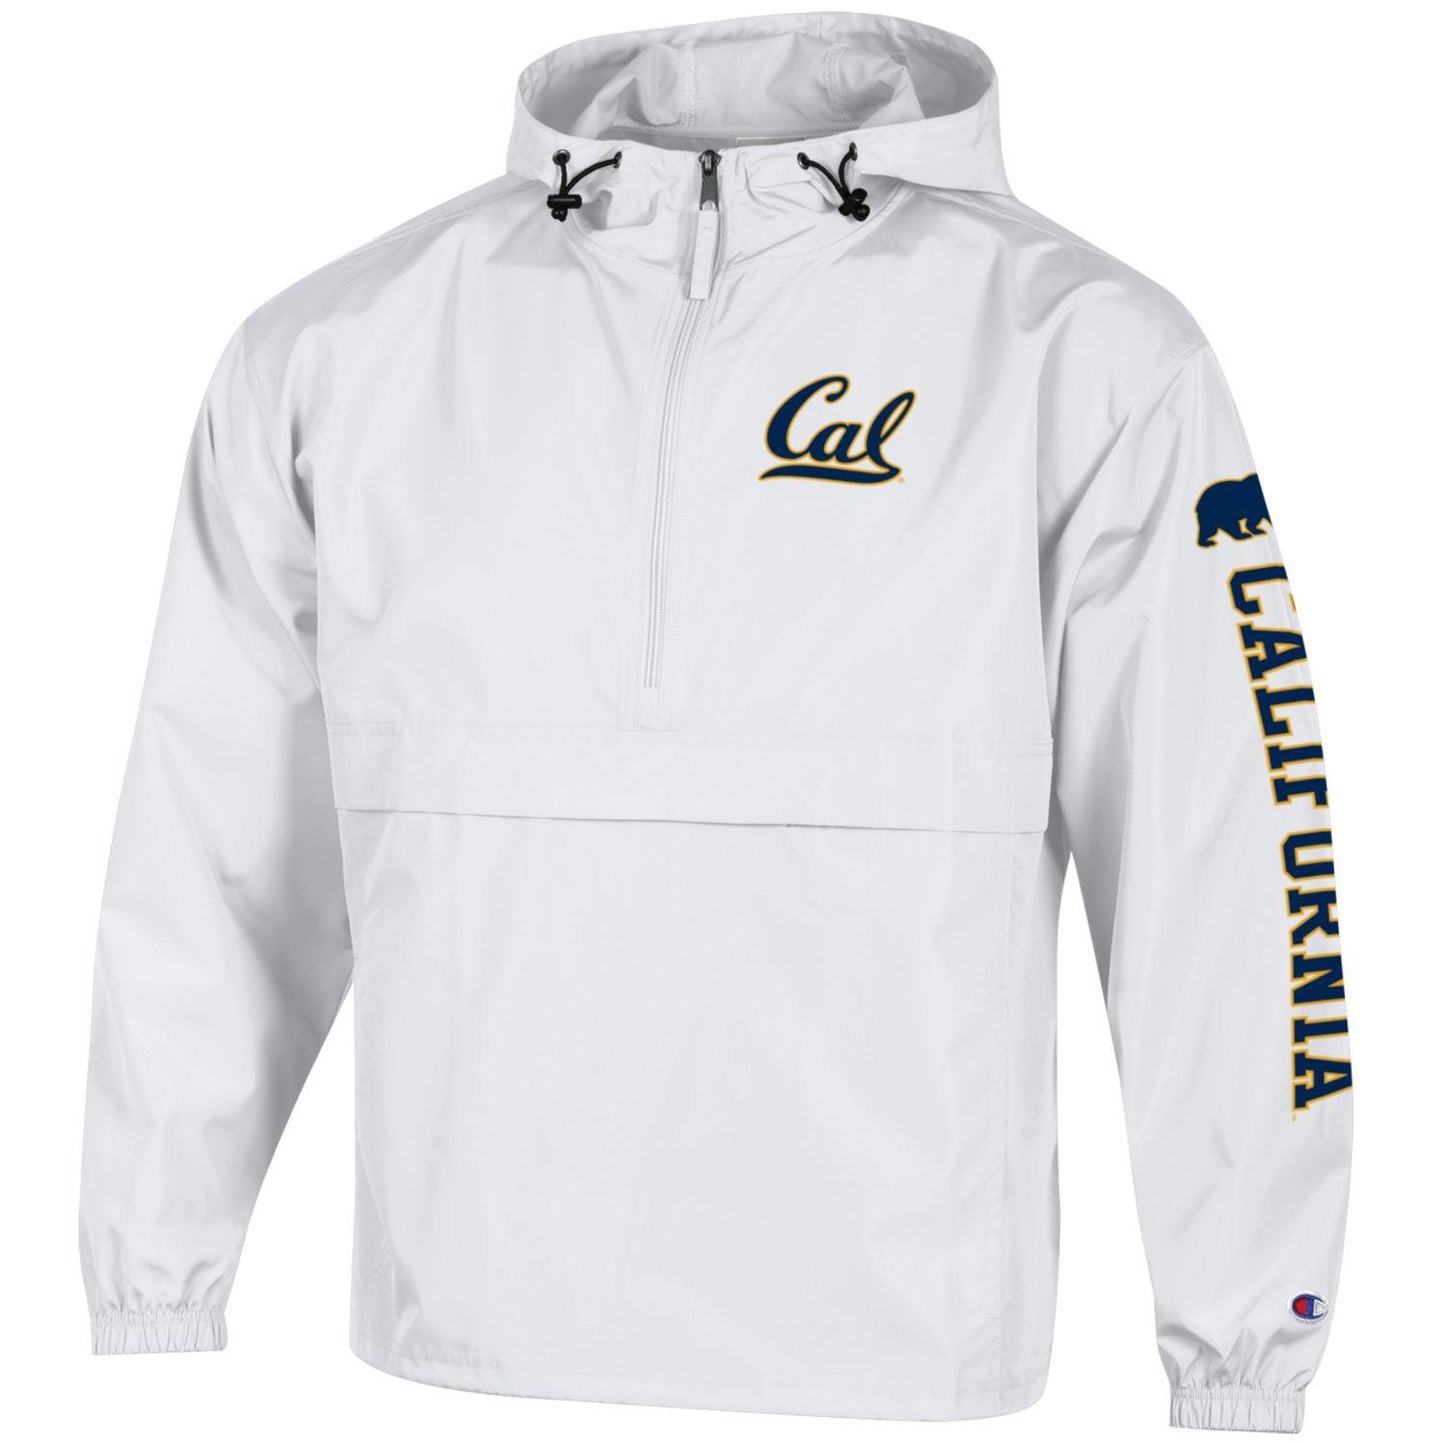 UC Berkeley bold script Cal Champion Men's Pack & Go Jacket -White-Shop College Wear